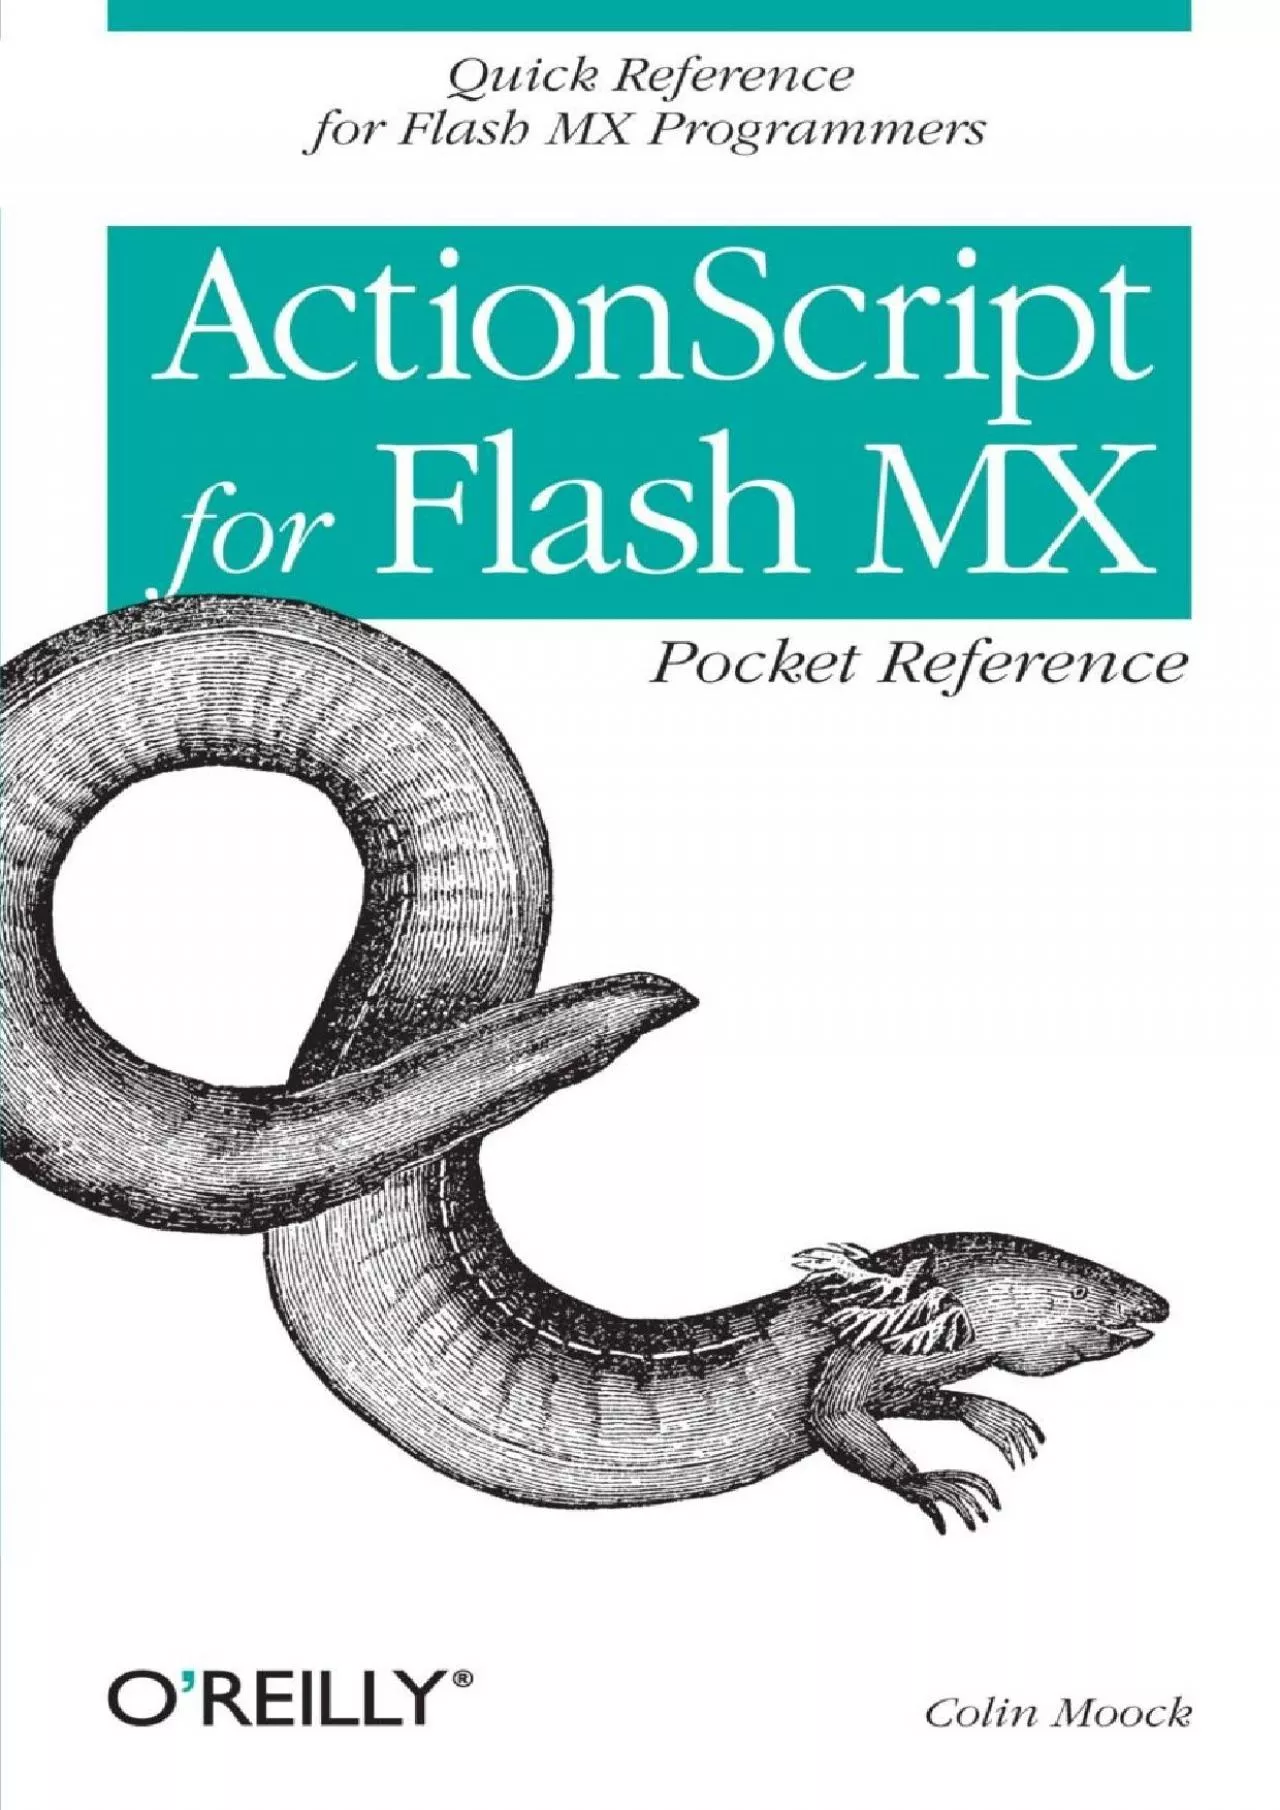 (DOWNLOAD)-ActionScript for Flash MX Pocket Reference: Quick Reference for Flash MX Programmers